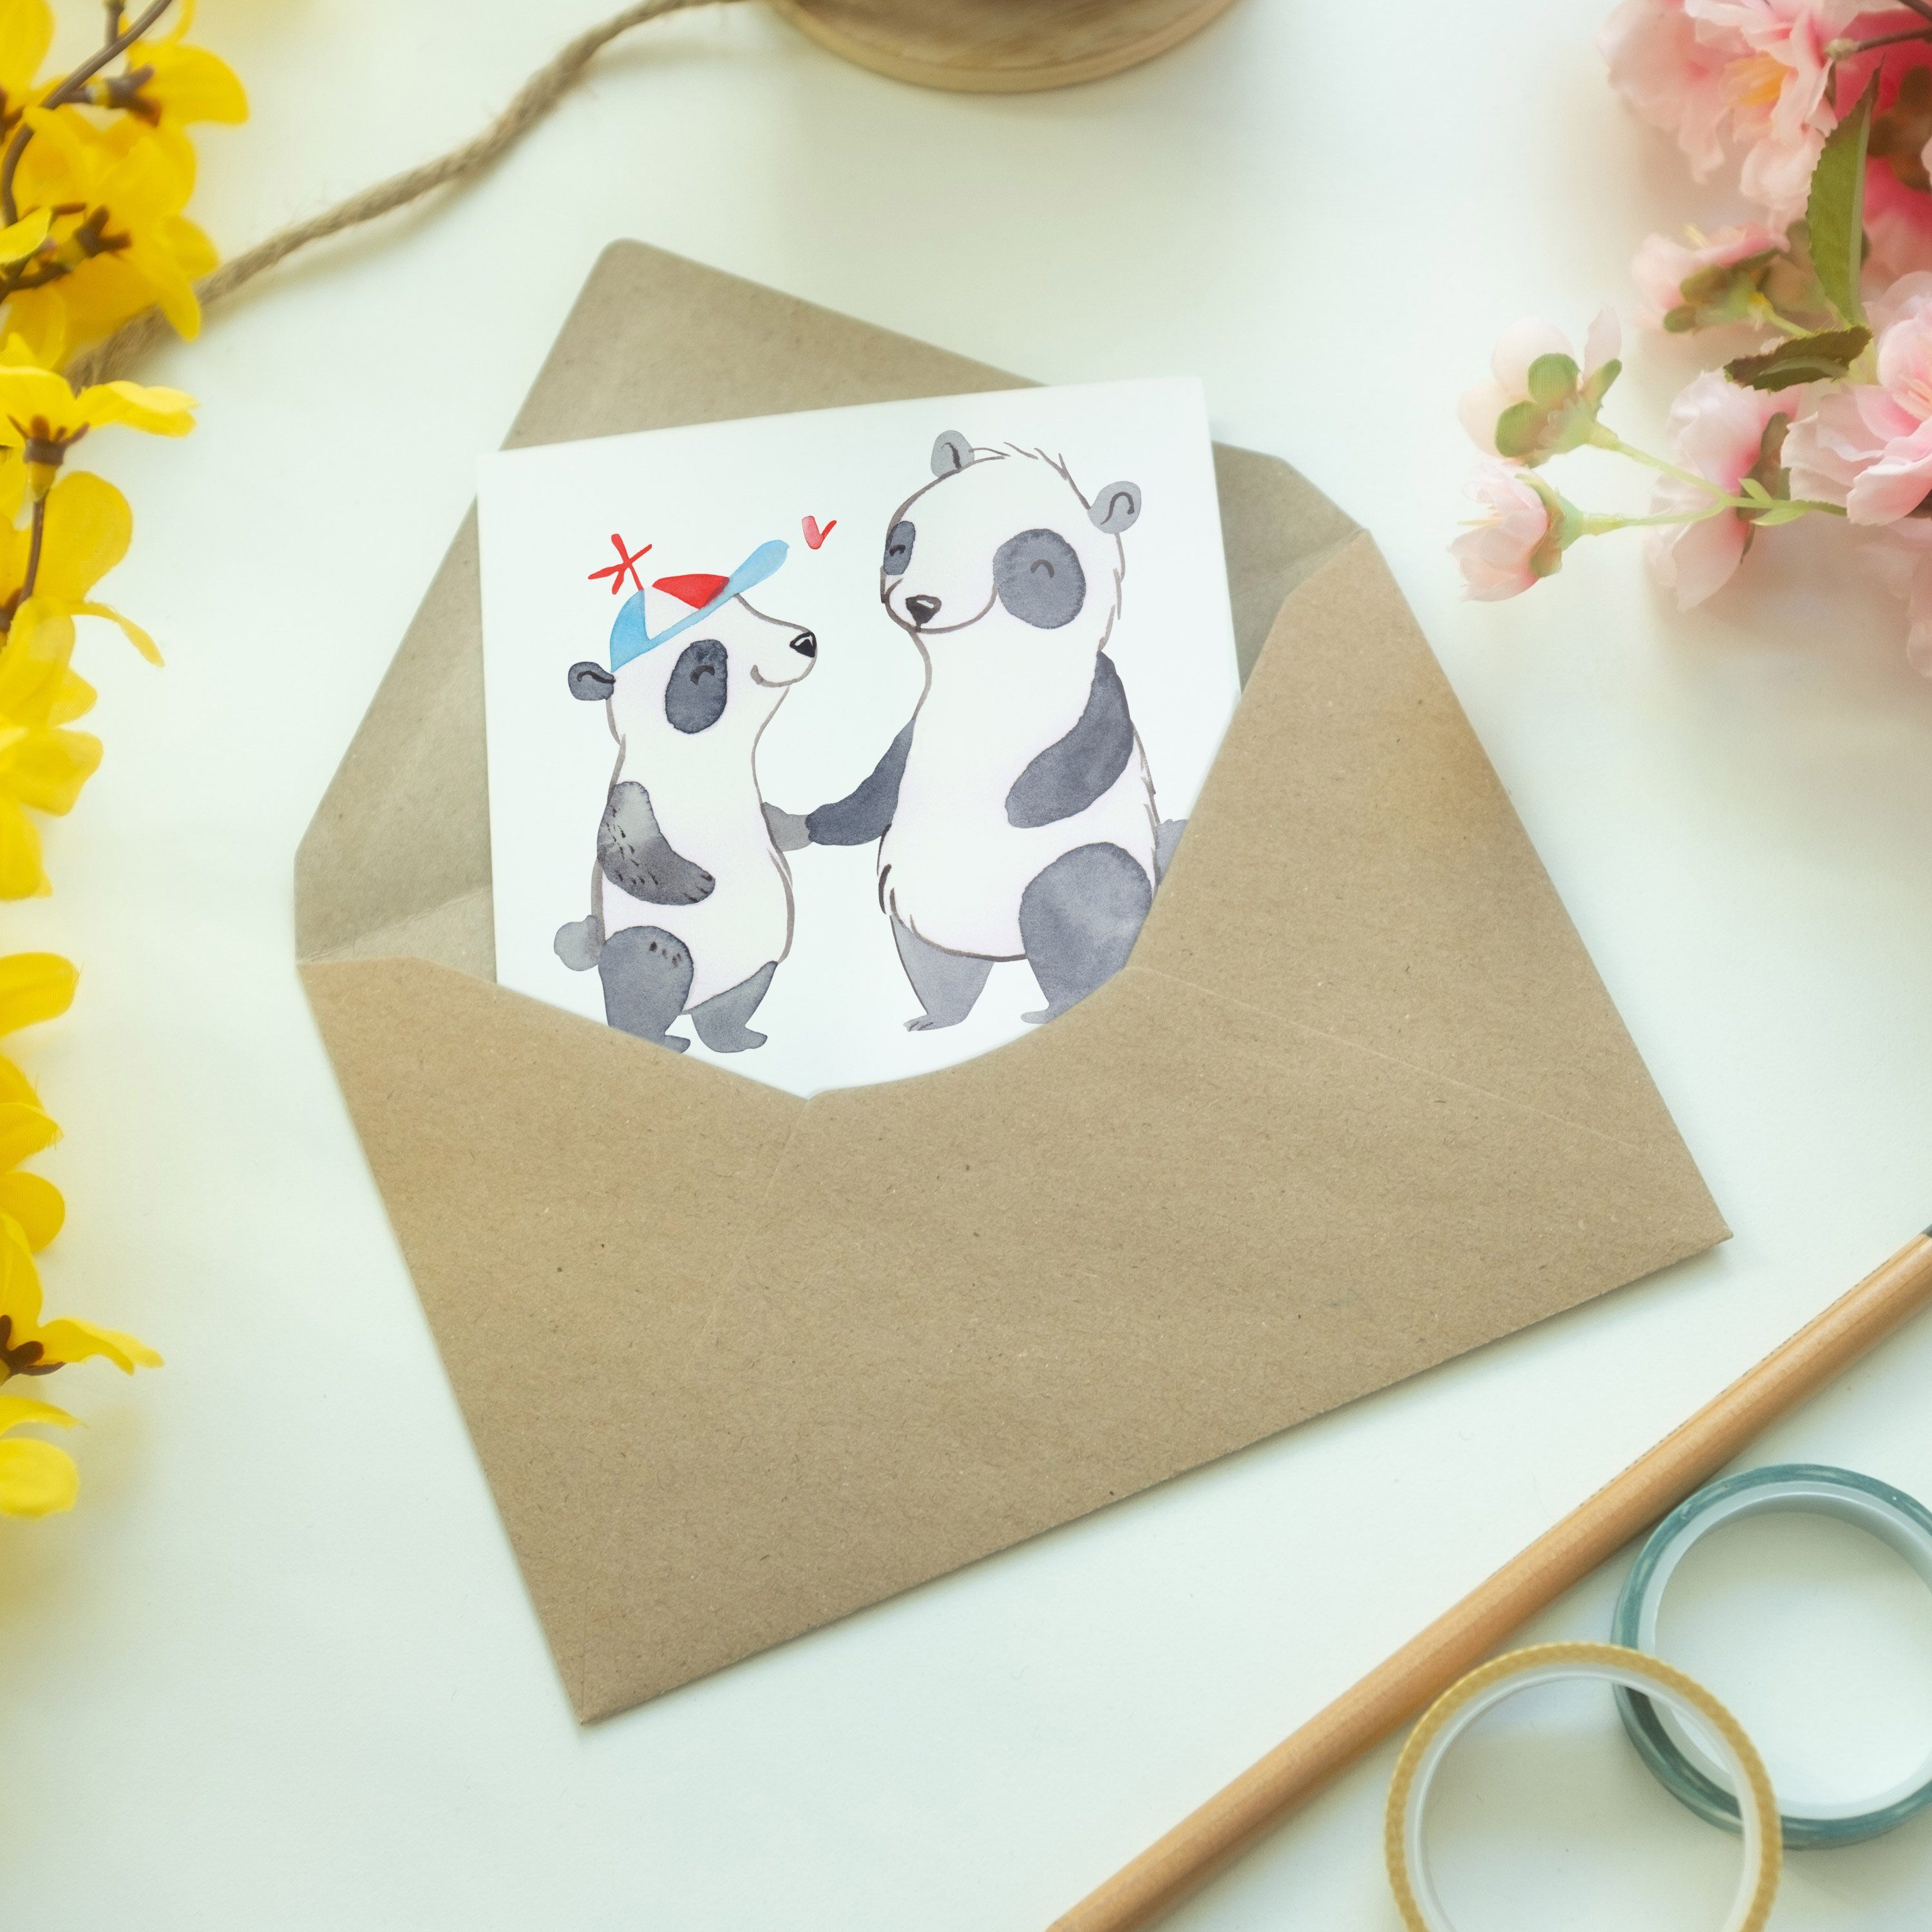 Mr. & Mrs. Panda - Welt - Karte, Vater Kla Geschenk, Bester Dankeschön, der Weiß Panda Grußkarte